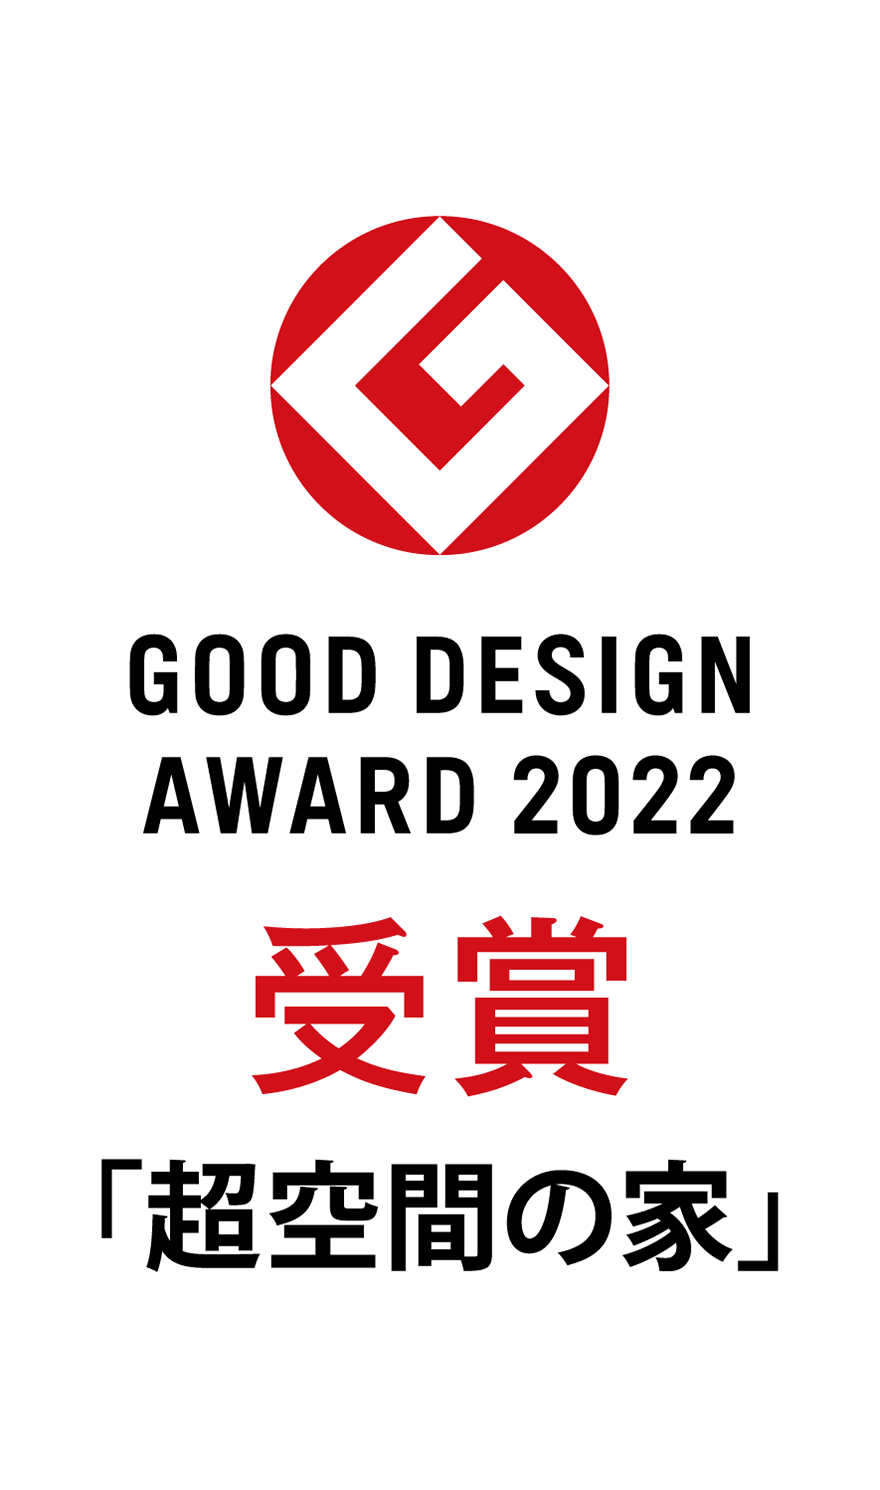 GOOD DESIGN AWARD 2022 受賞 超空間の家